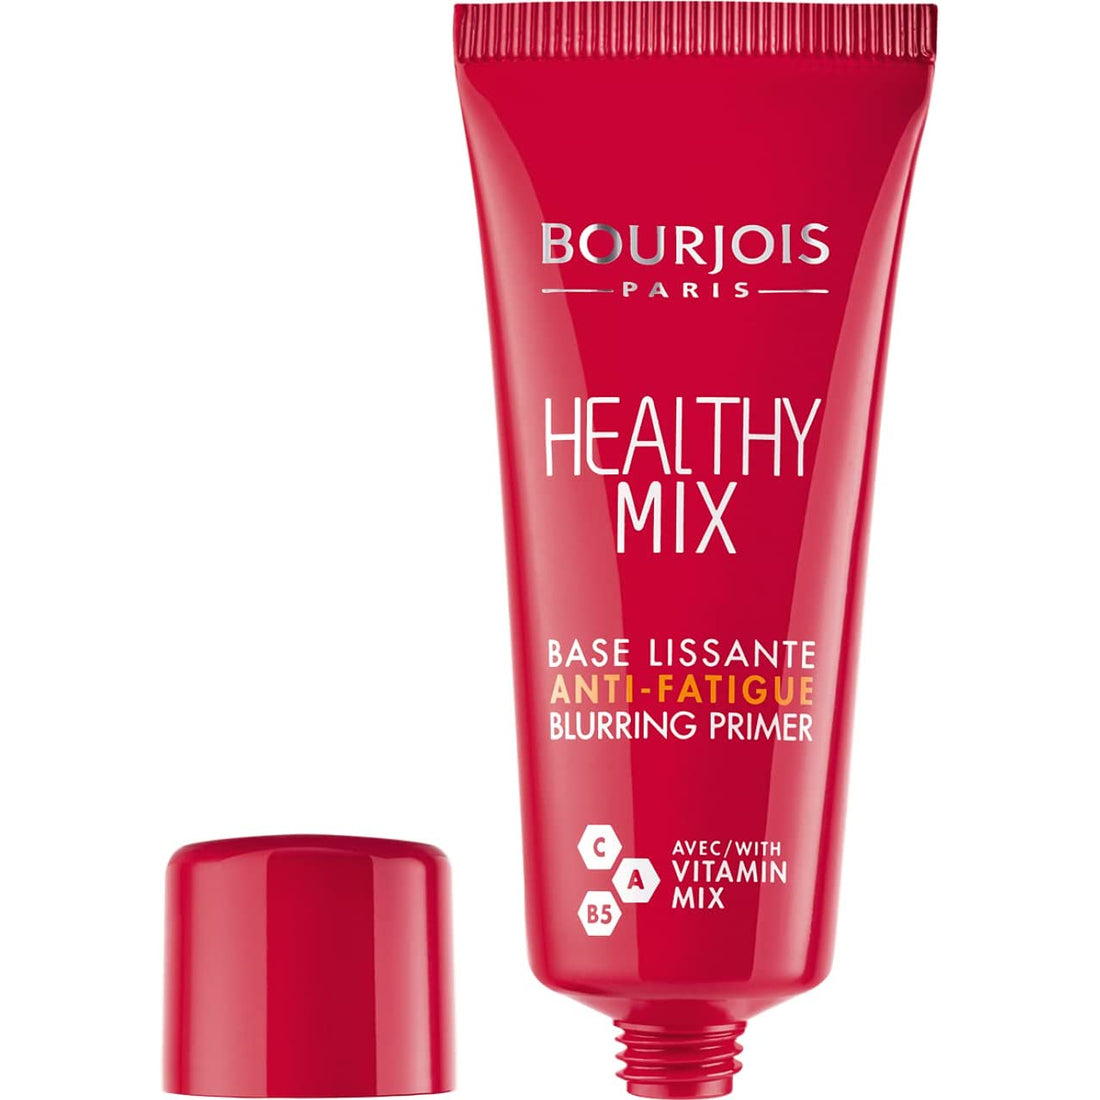 Bourjois Healthy Mix Anti-Fatigue Blurring Primer Universal Shade